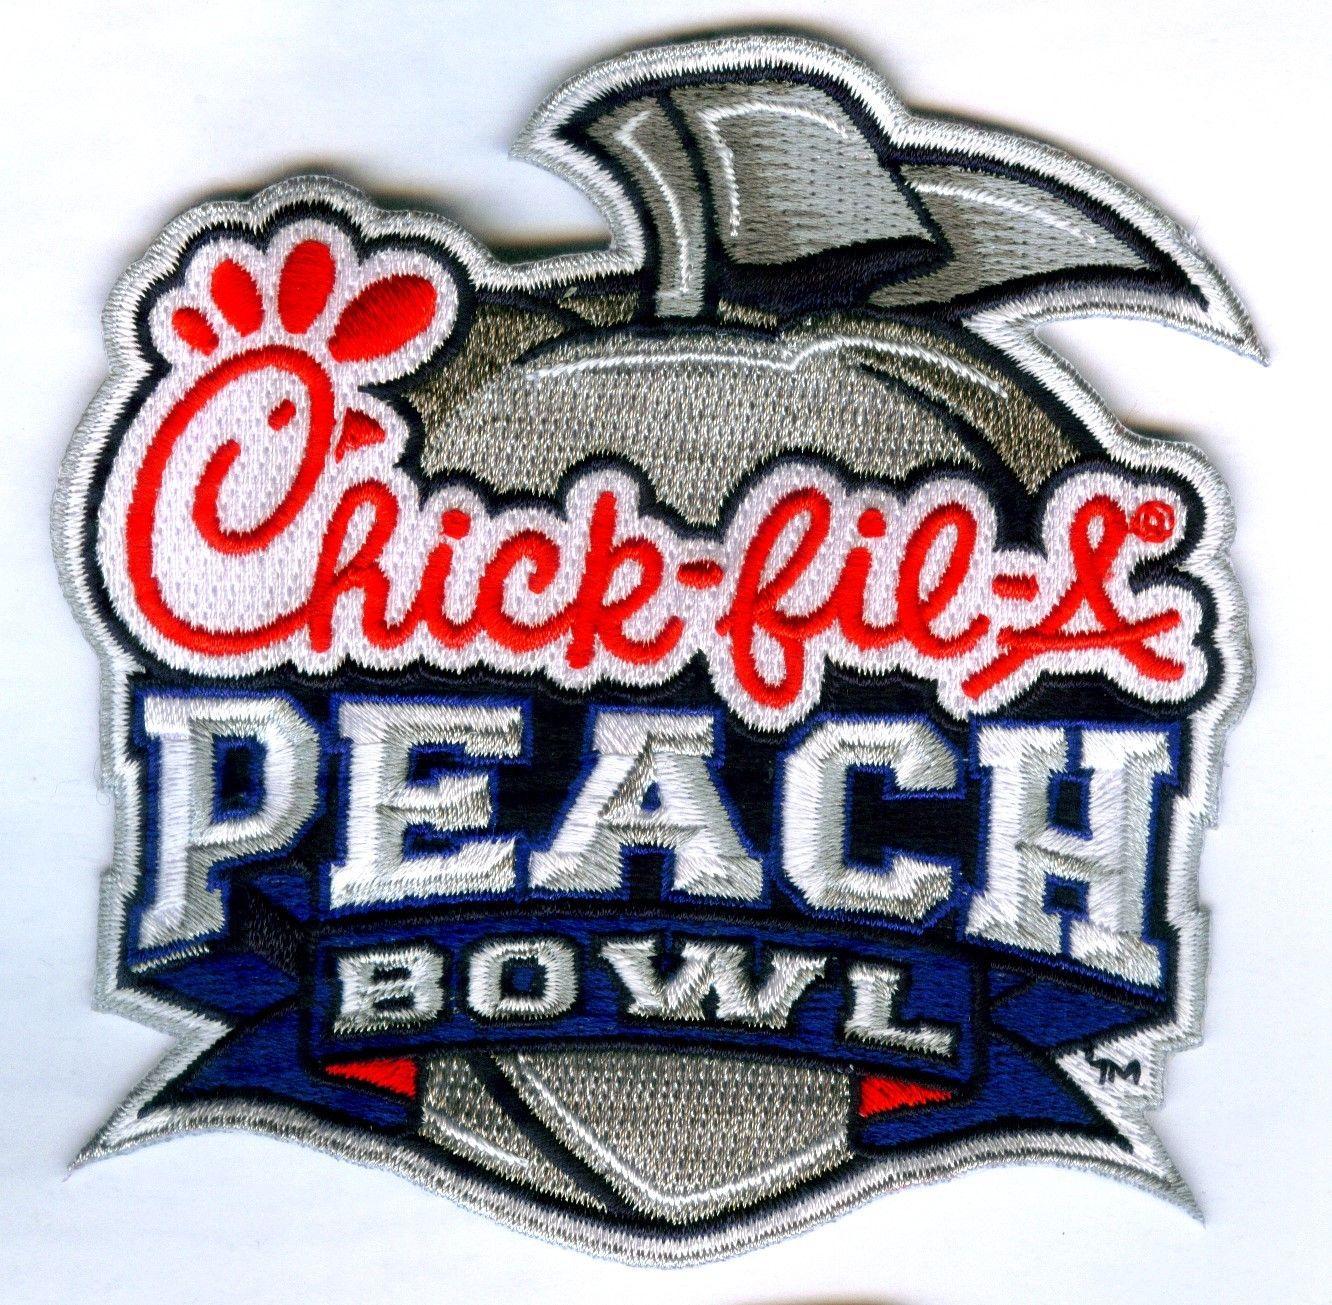 Peach Bowl Logo - Chick Fil A Peach Bowl Patch